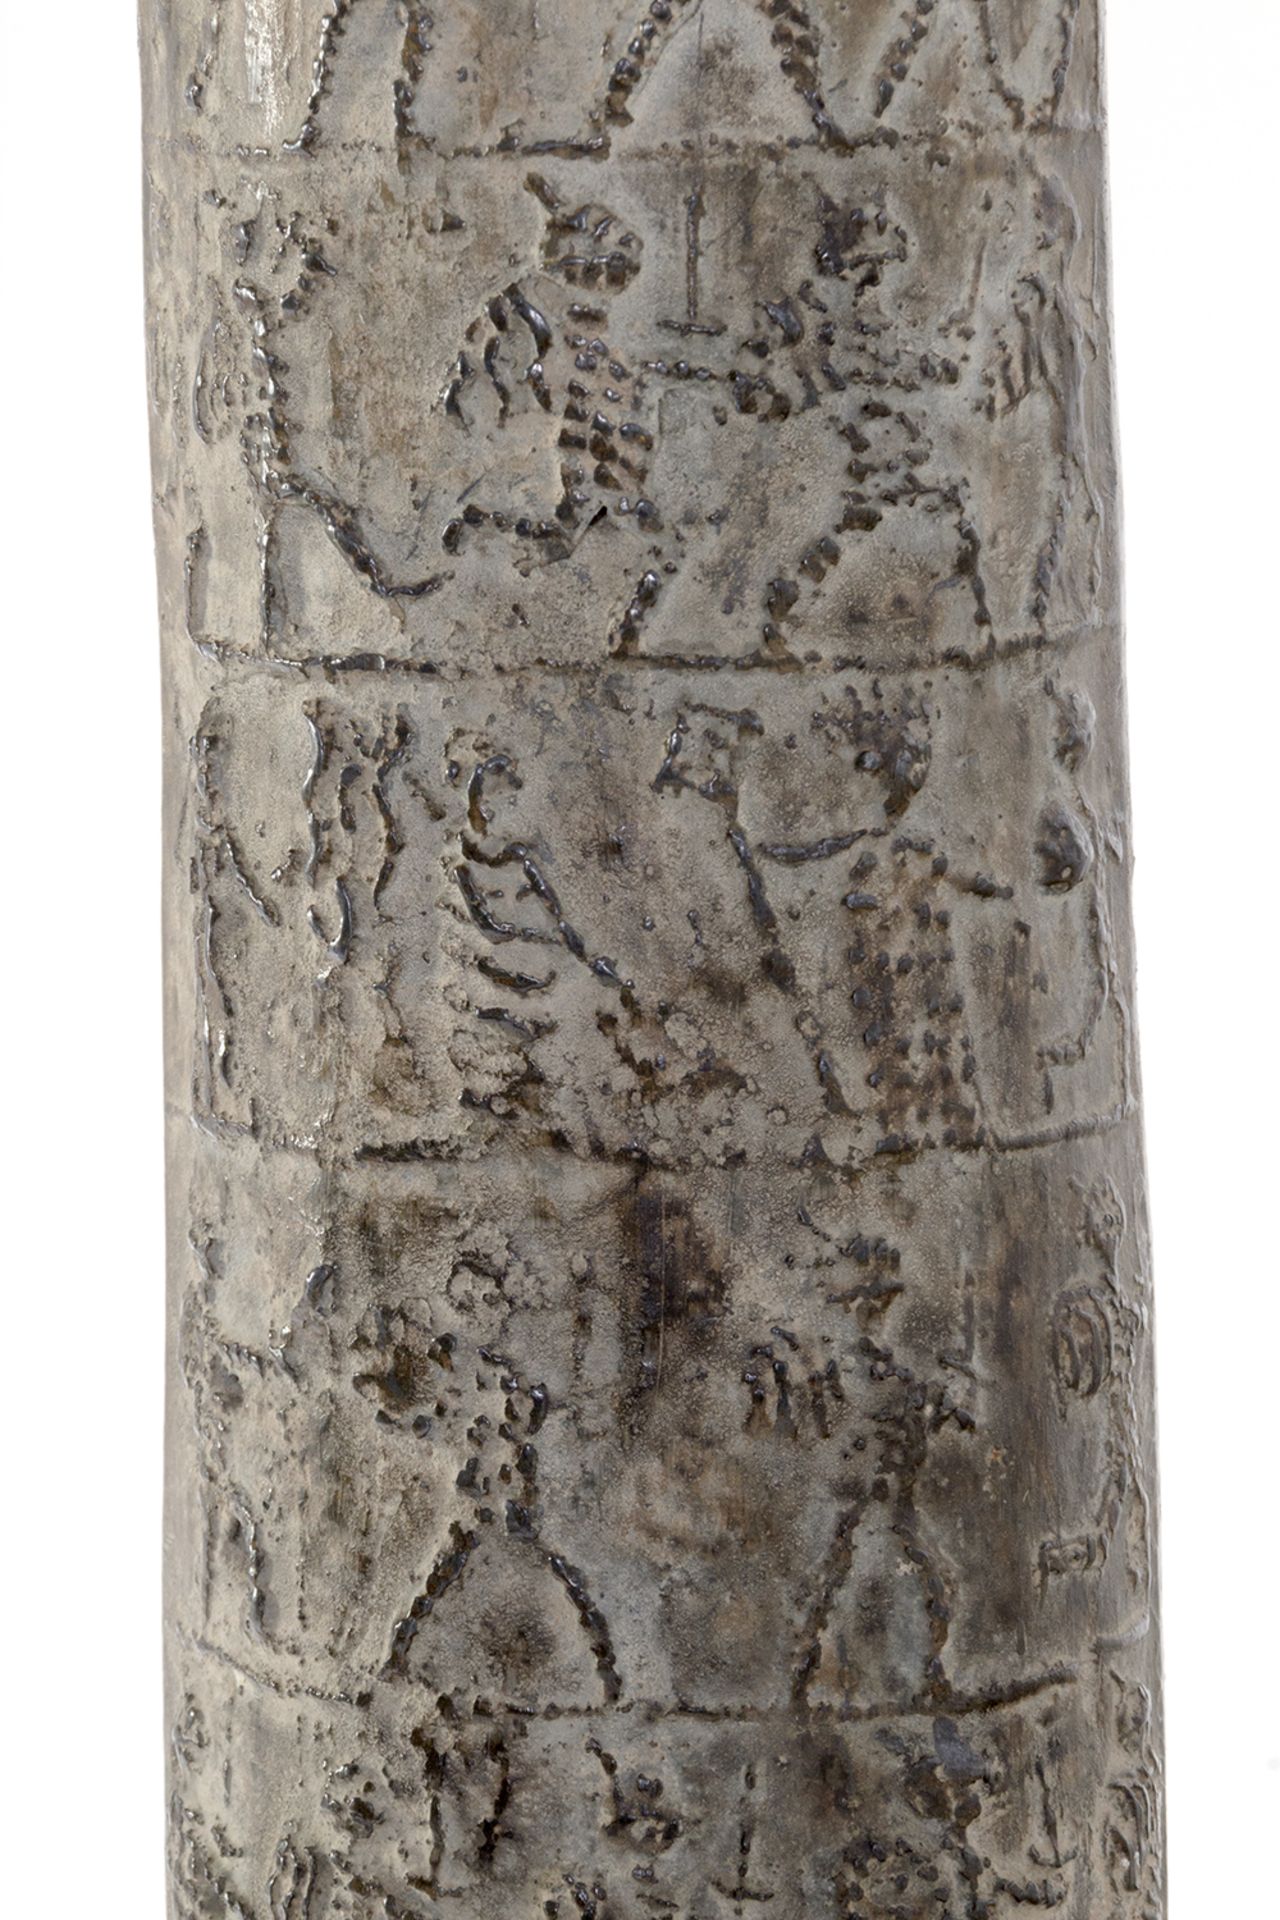 Columna de Trajano en plomo. Italia, Grand Tour, siglo XVIII. - Image 4 of 5